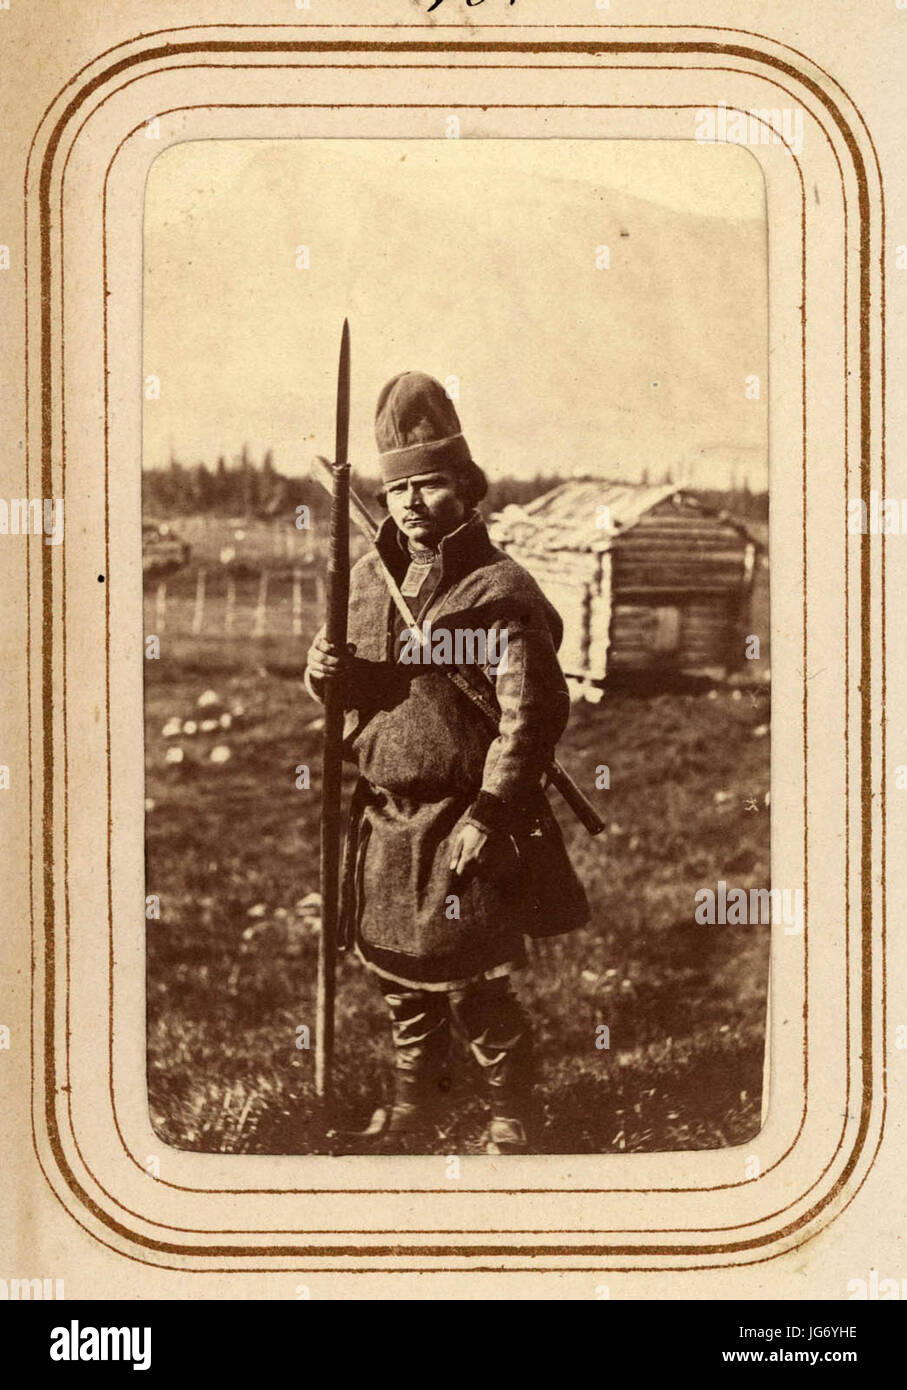 Samisk man med spjut. Lotten von Düben 1868 - Nordiska Museet - NMA.0033092 1 Stock Photo